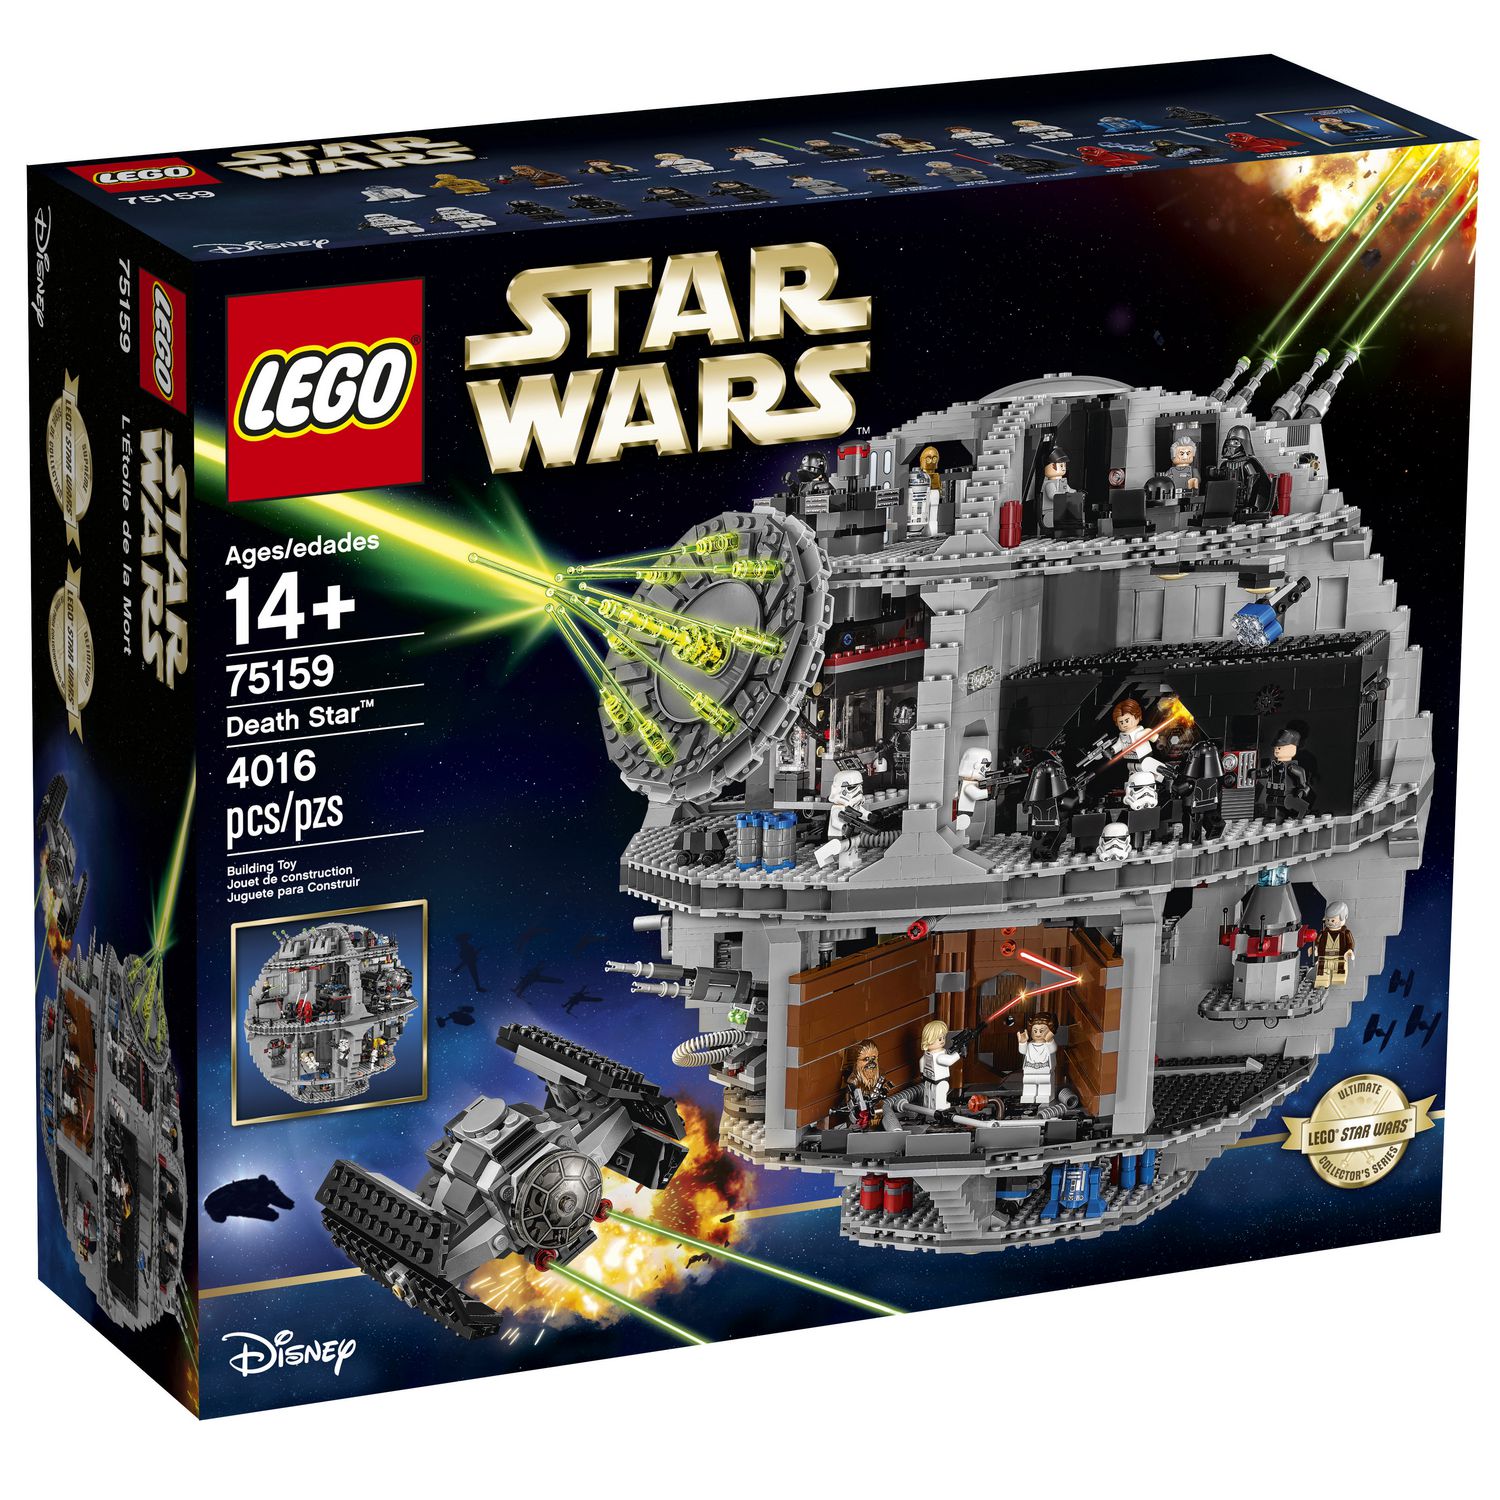 Star Wars : il transforme le Globe de LEGO en Étoile de la Mort